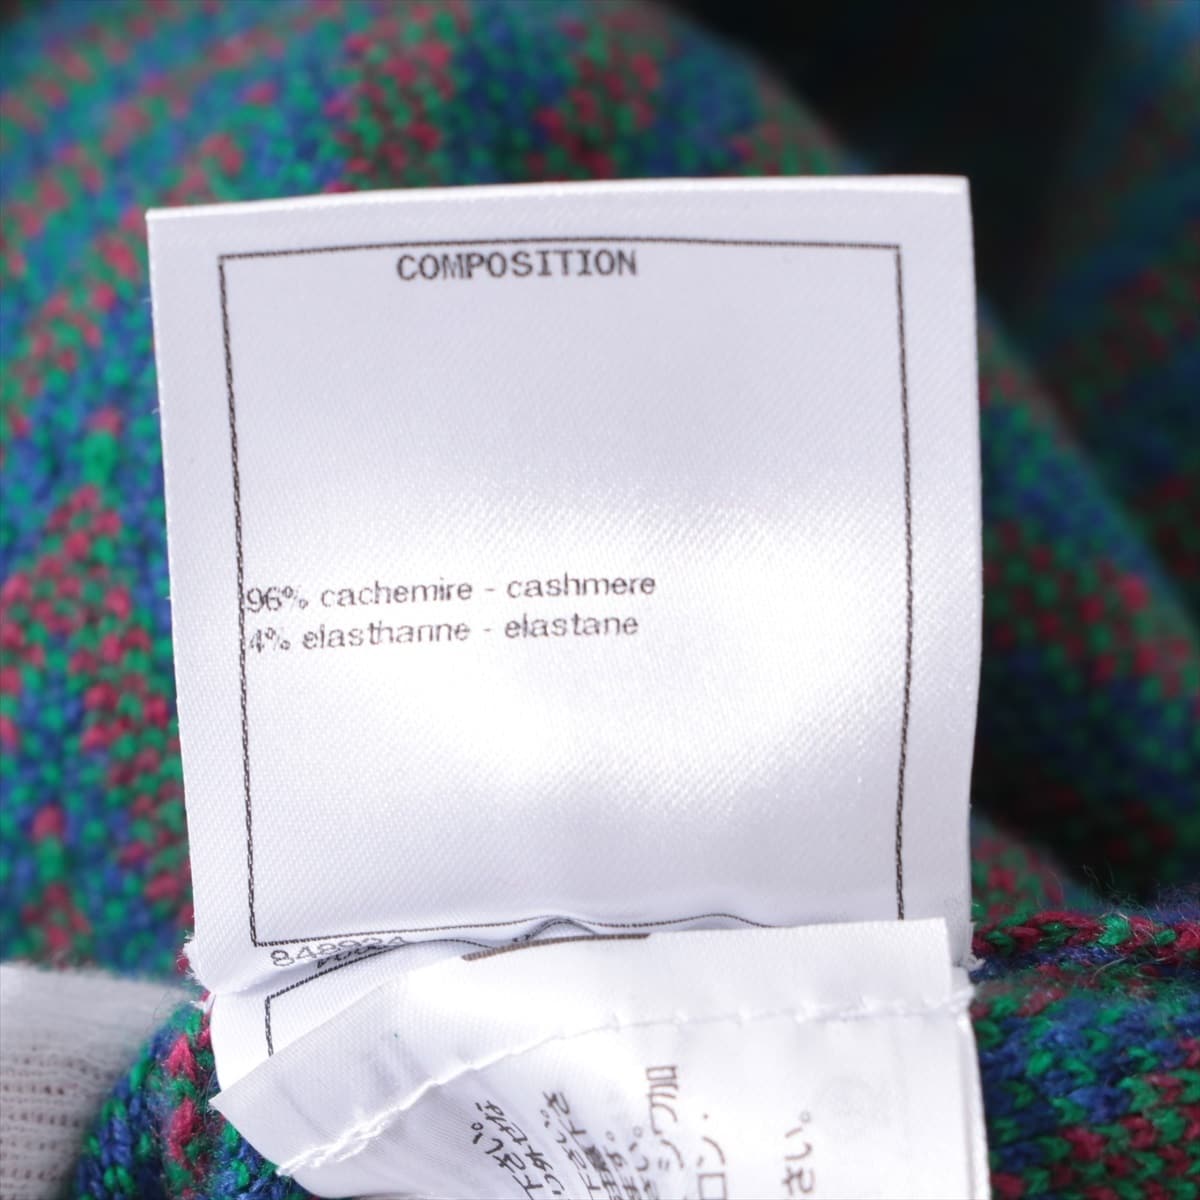 Chanel Coco Mark P71 Cashmere Knit dress 34 Ladies' Multicolor